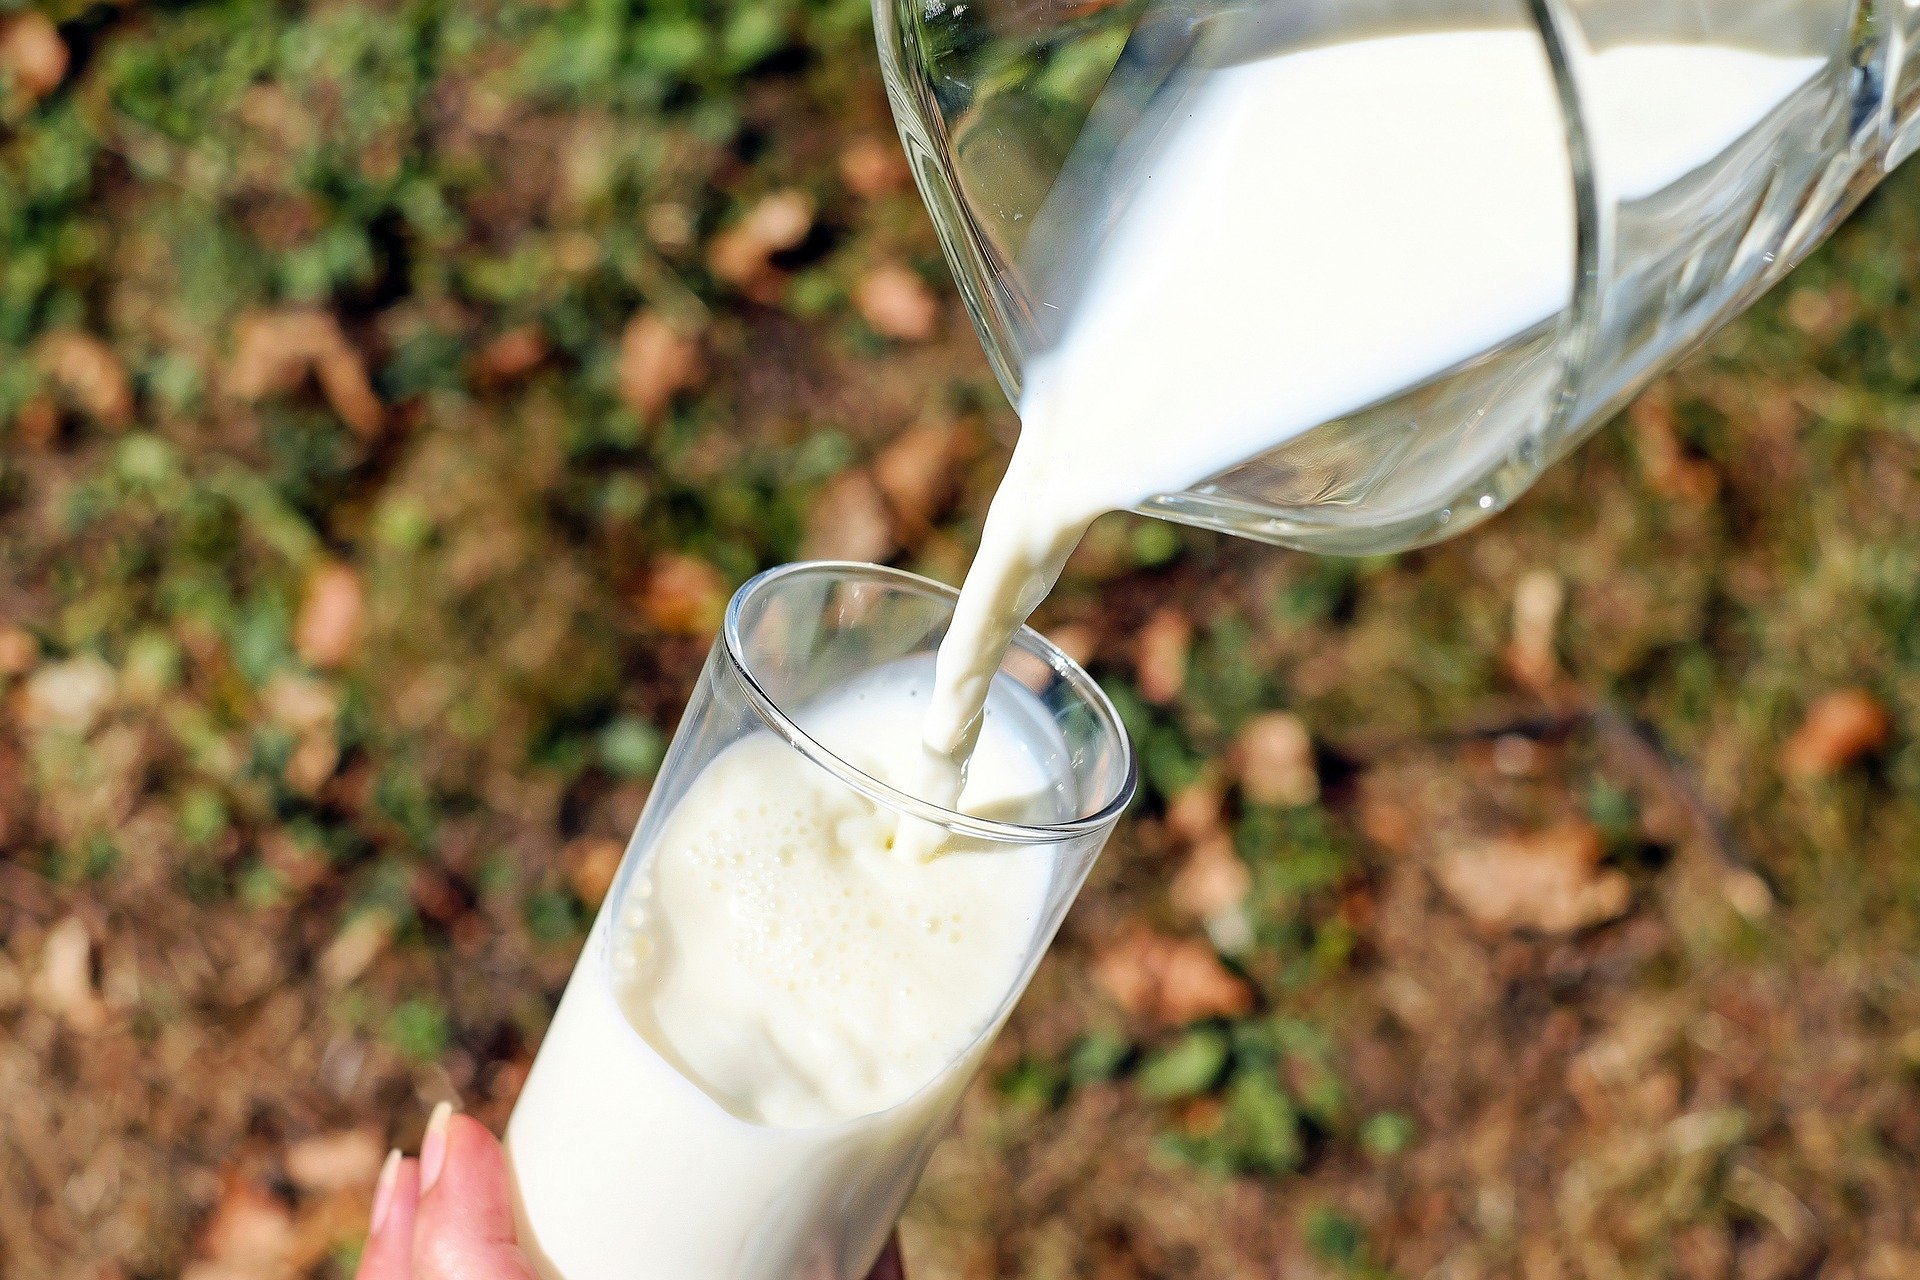 Full cream milk can reduce the risk of obesity in children